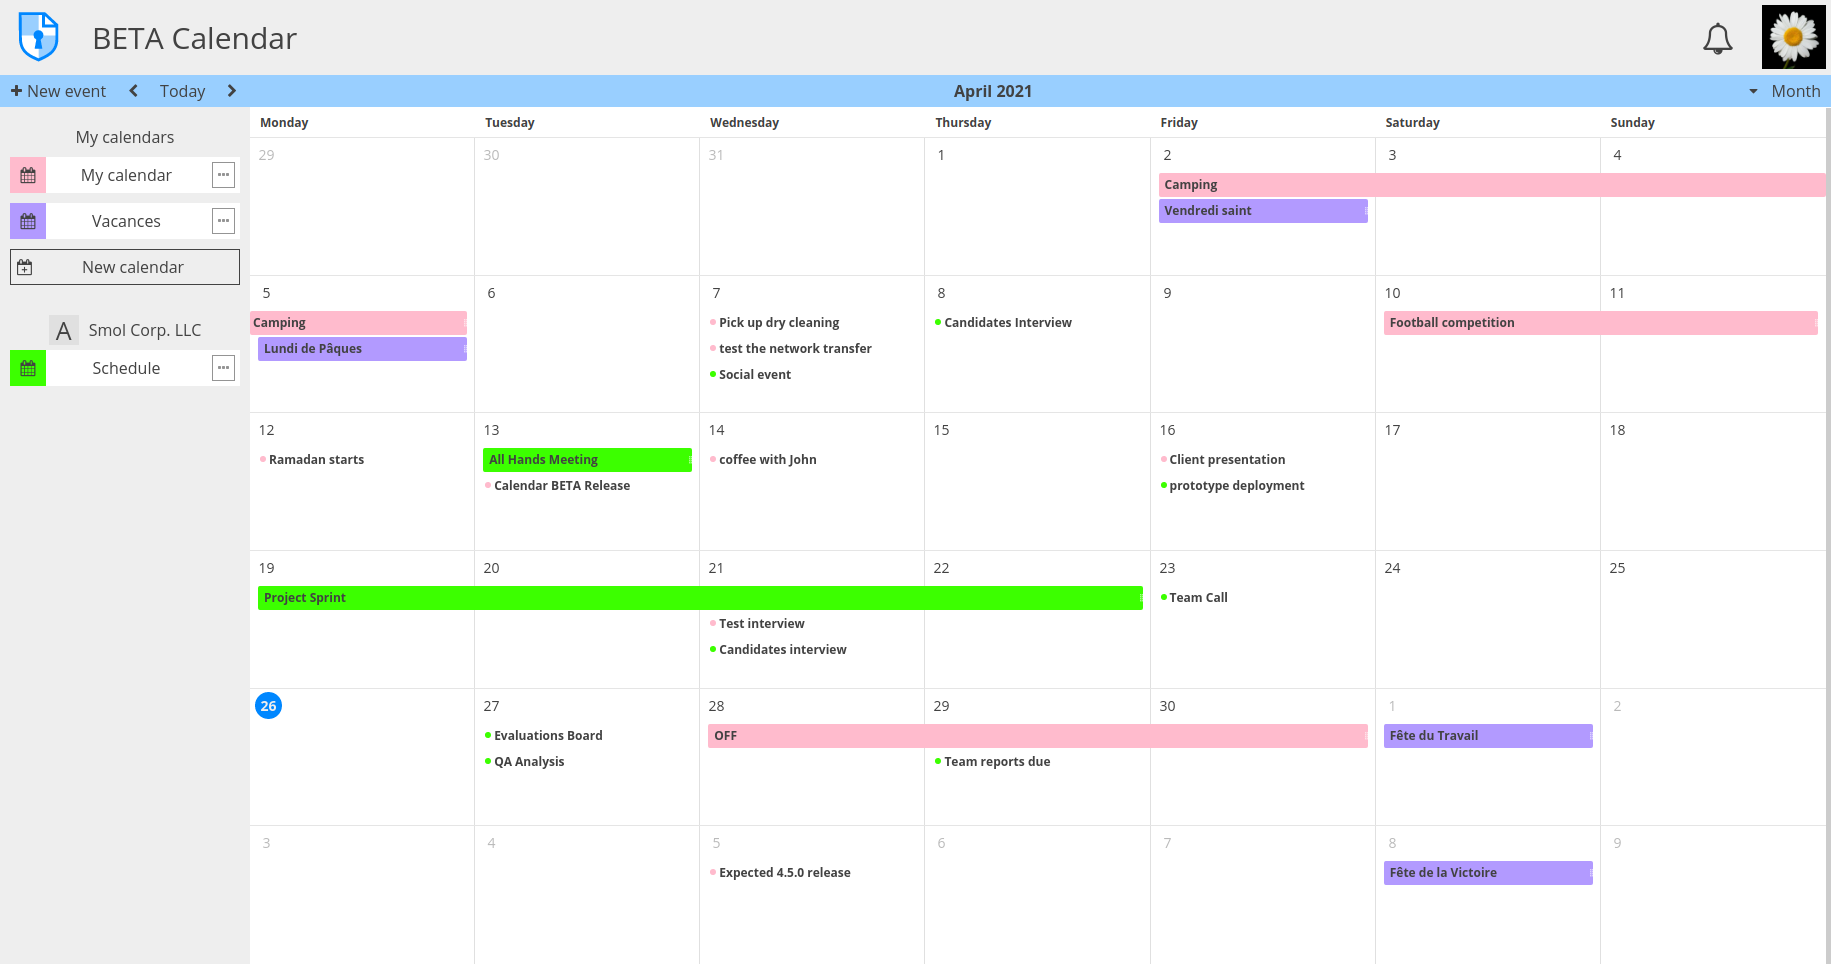 A beta preview of the calendar application